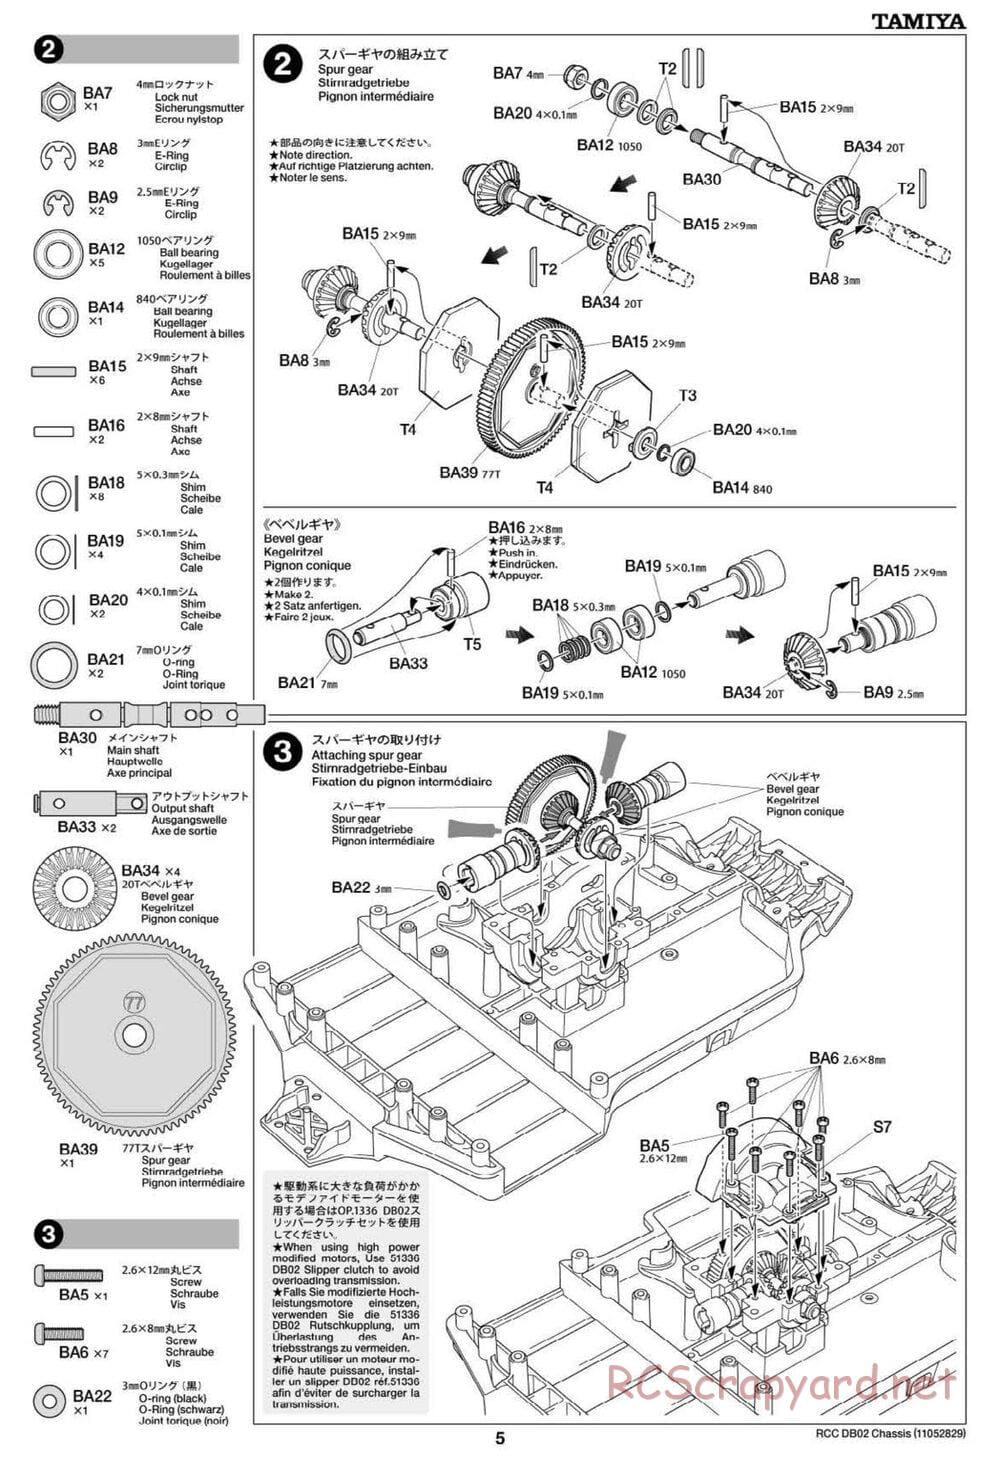 Tamiya - Leonis - DB-02 Chassis - Manual - Page 5